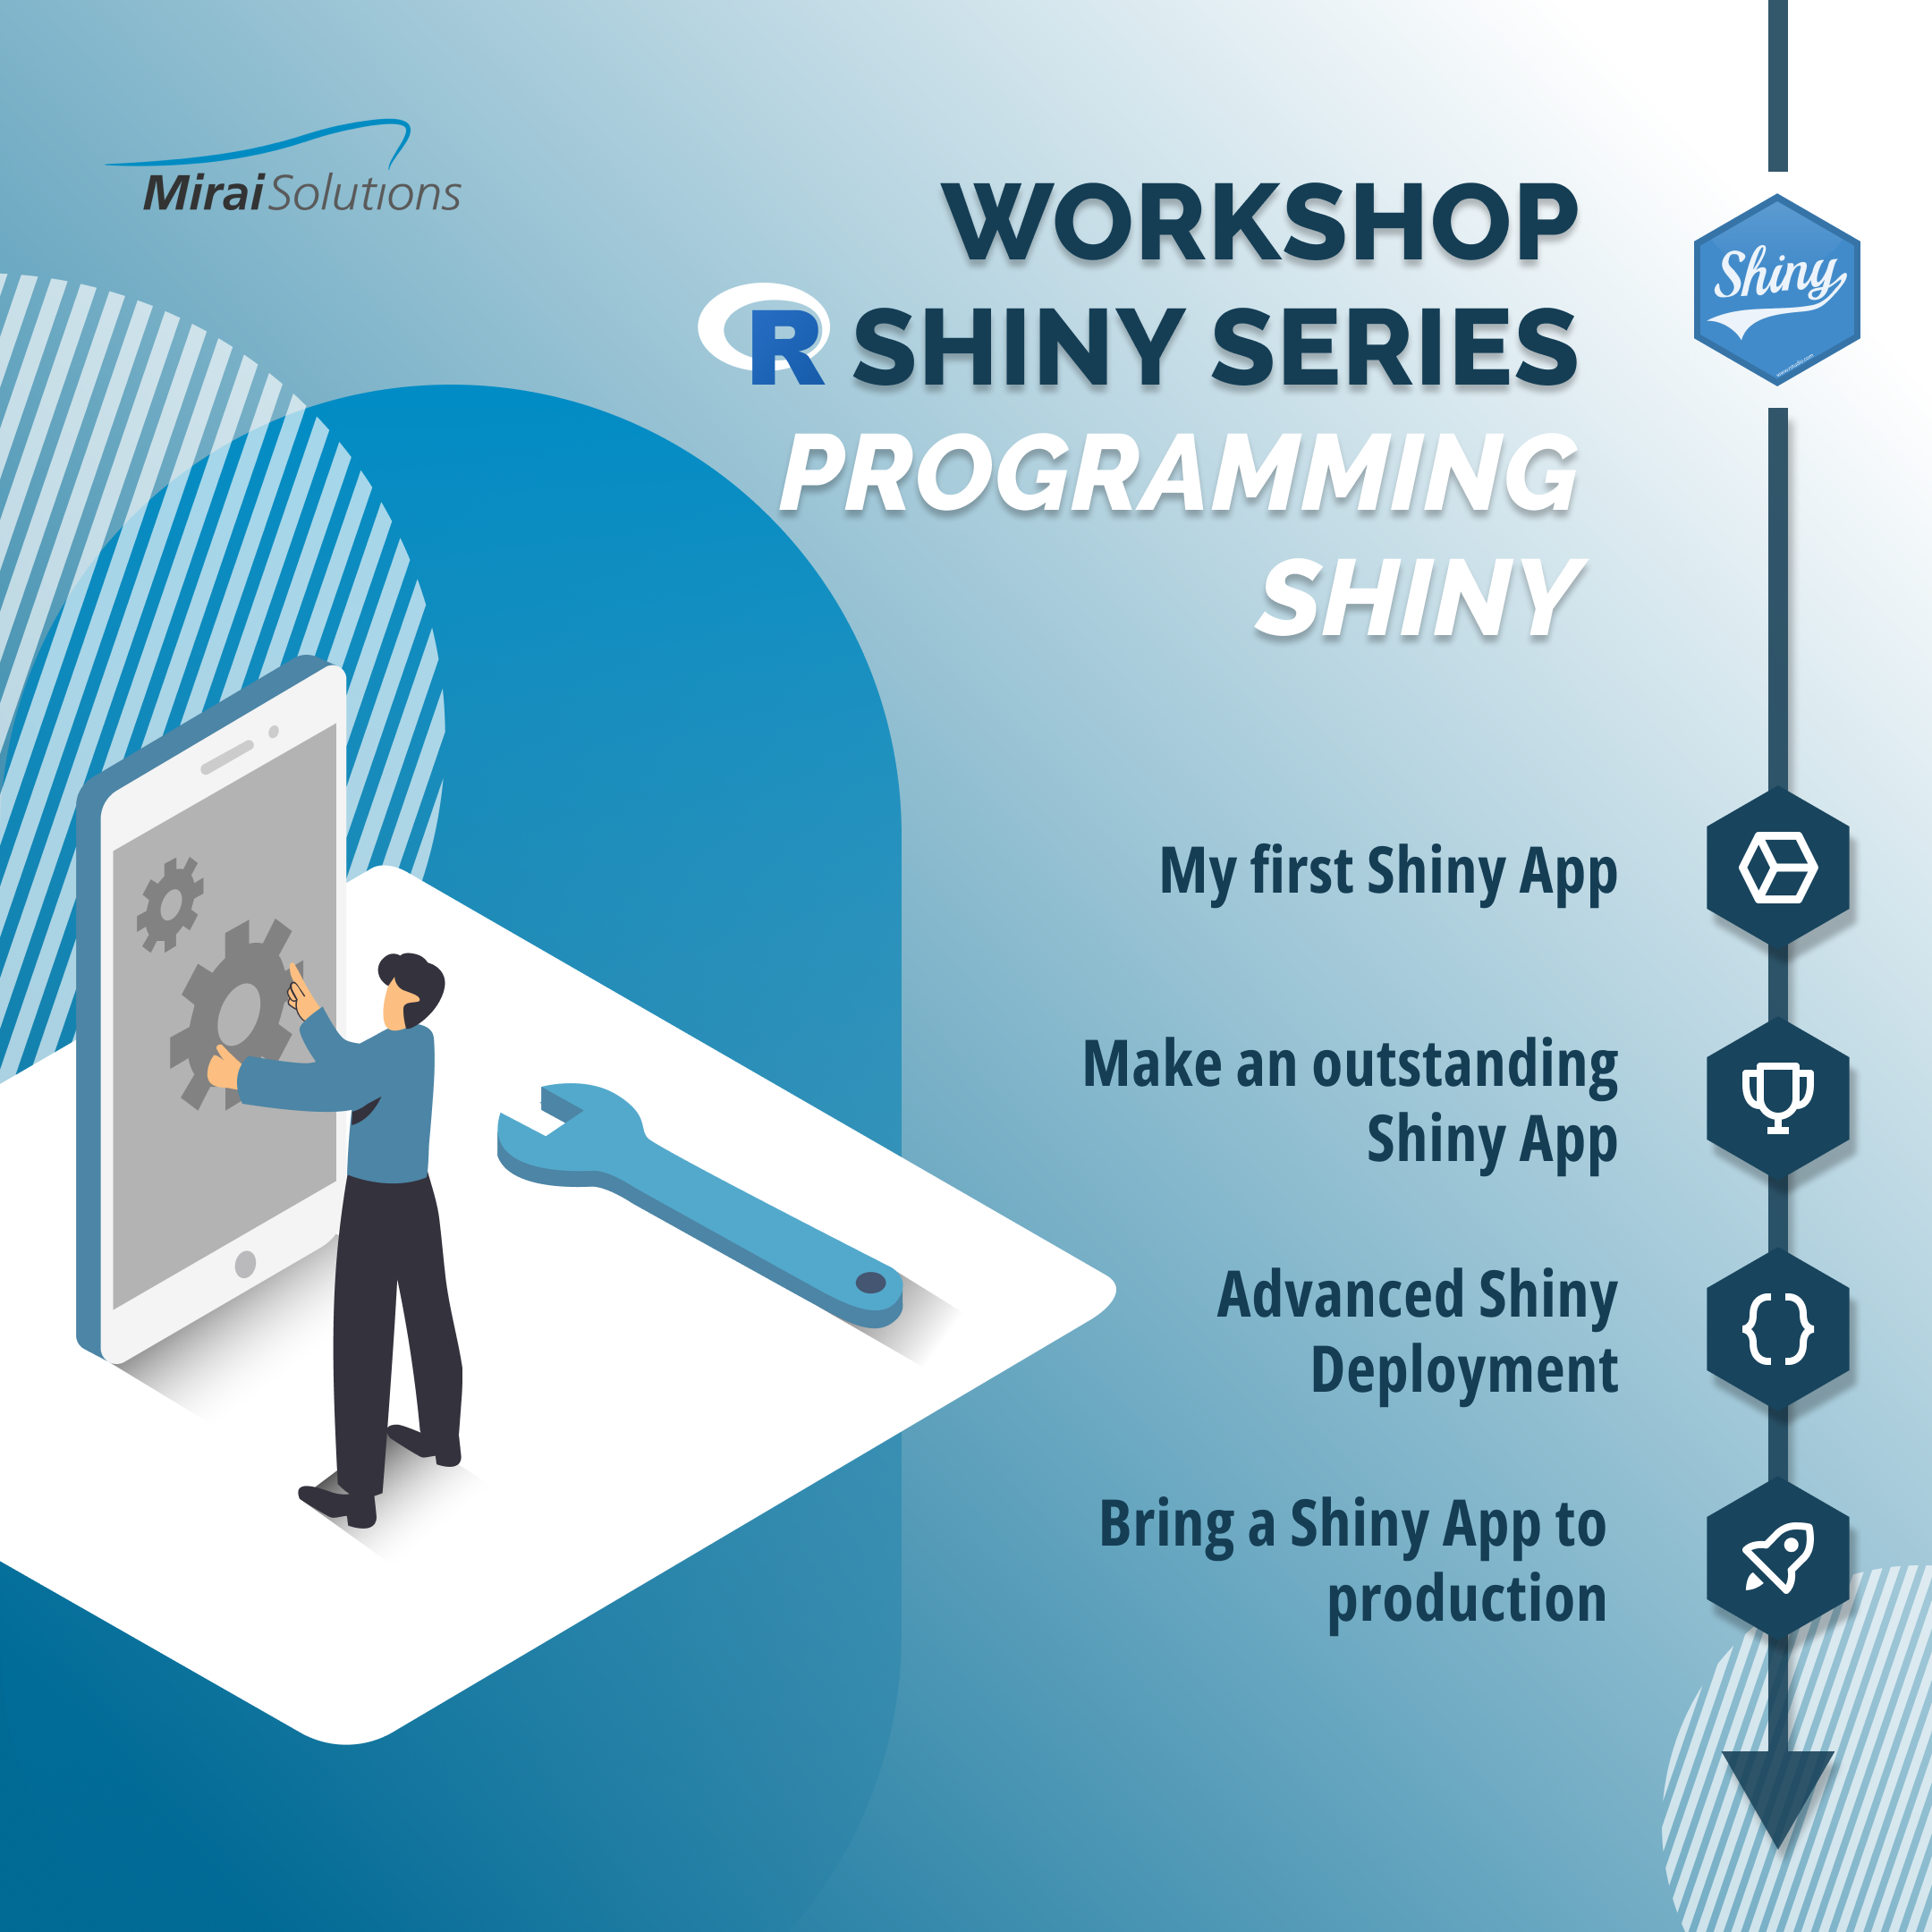 Full R Shiny path workshop offer